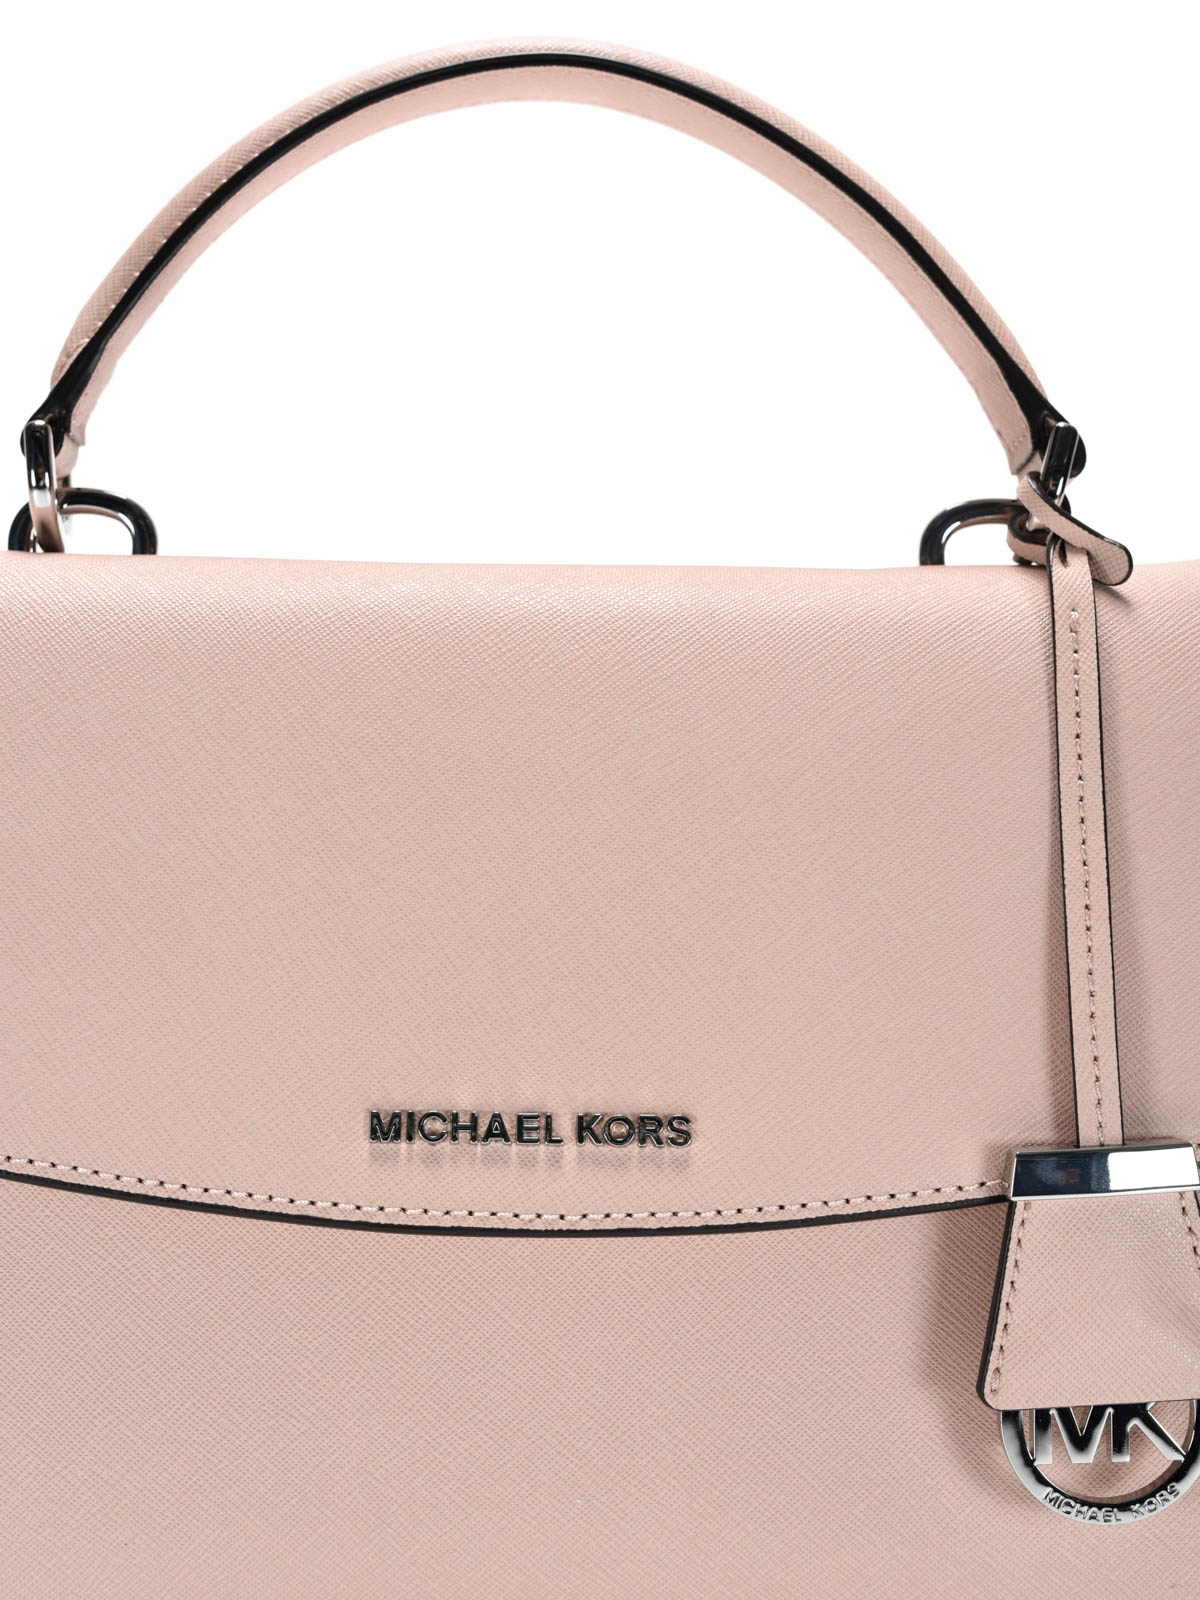 MICHAEL Michael Kors Ava Medium Saffiano Satchel Bag, Blush